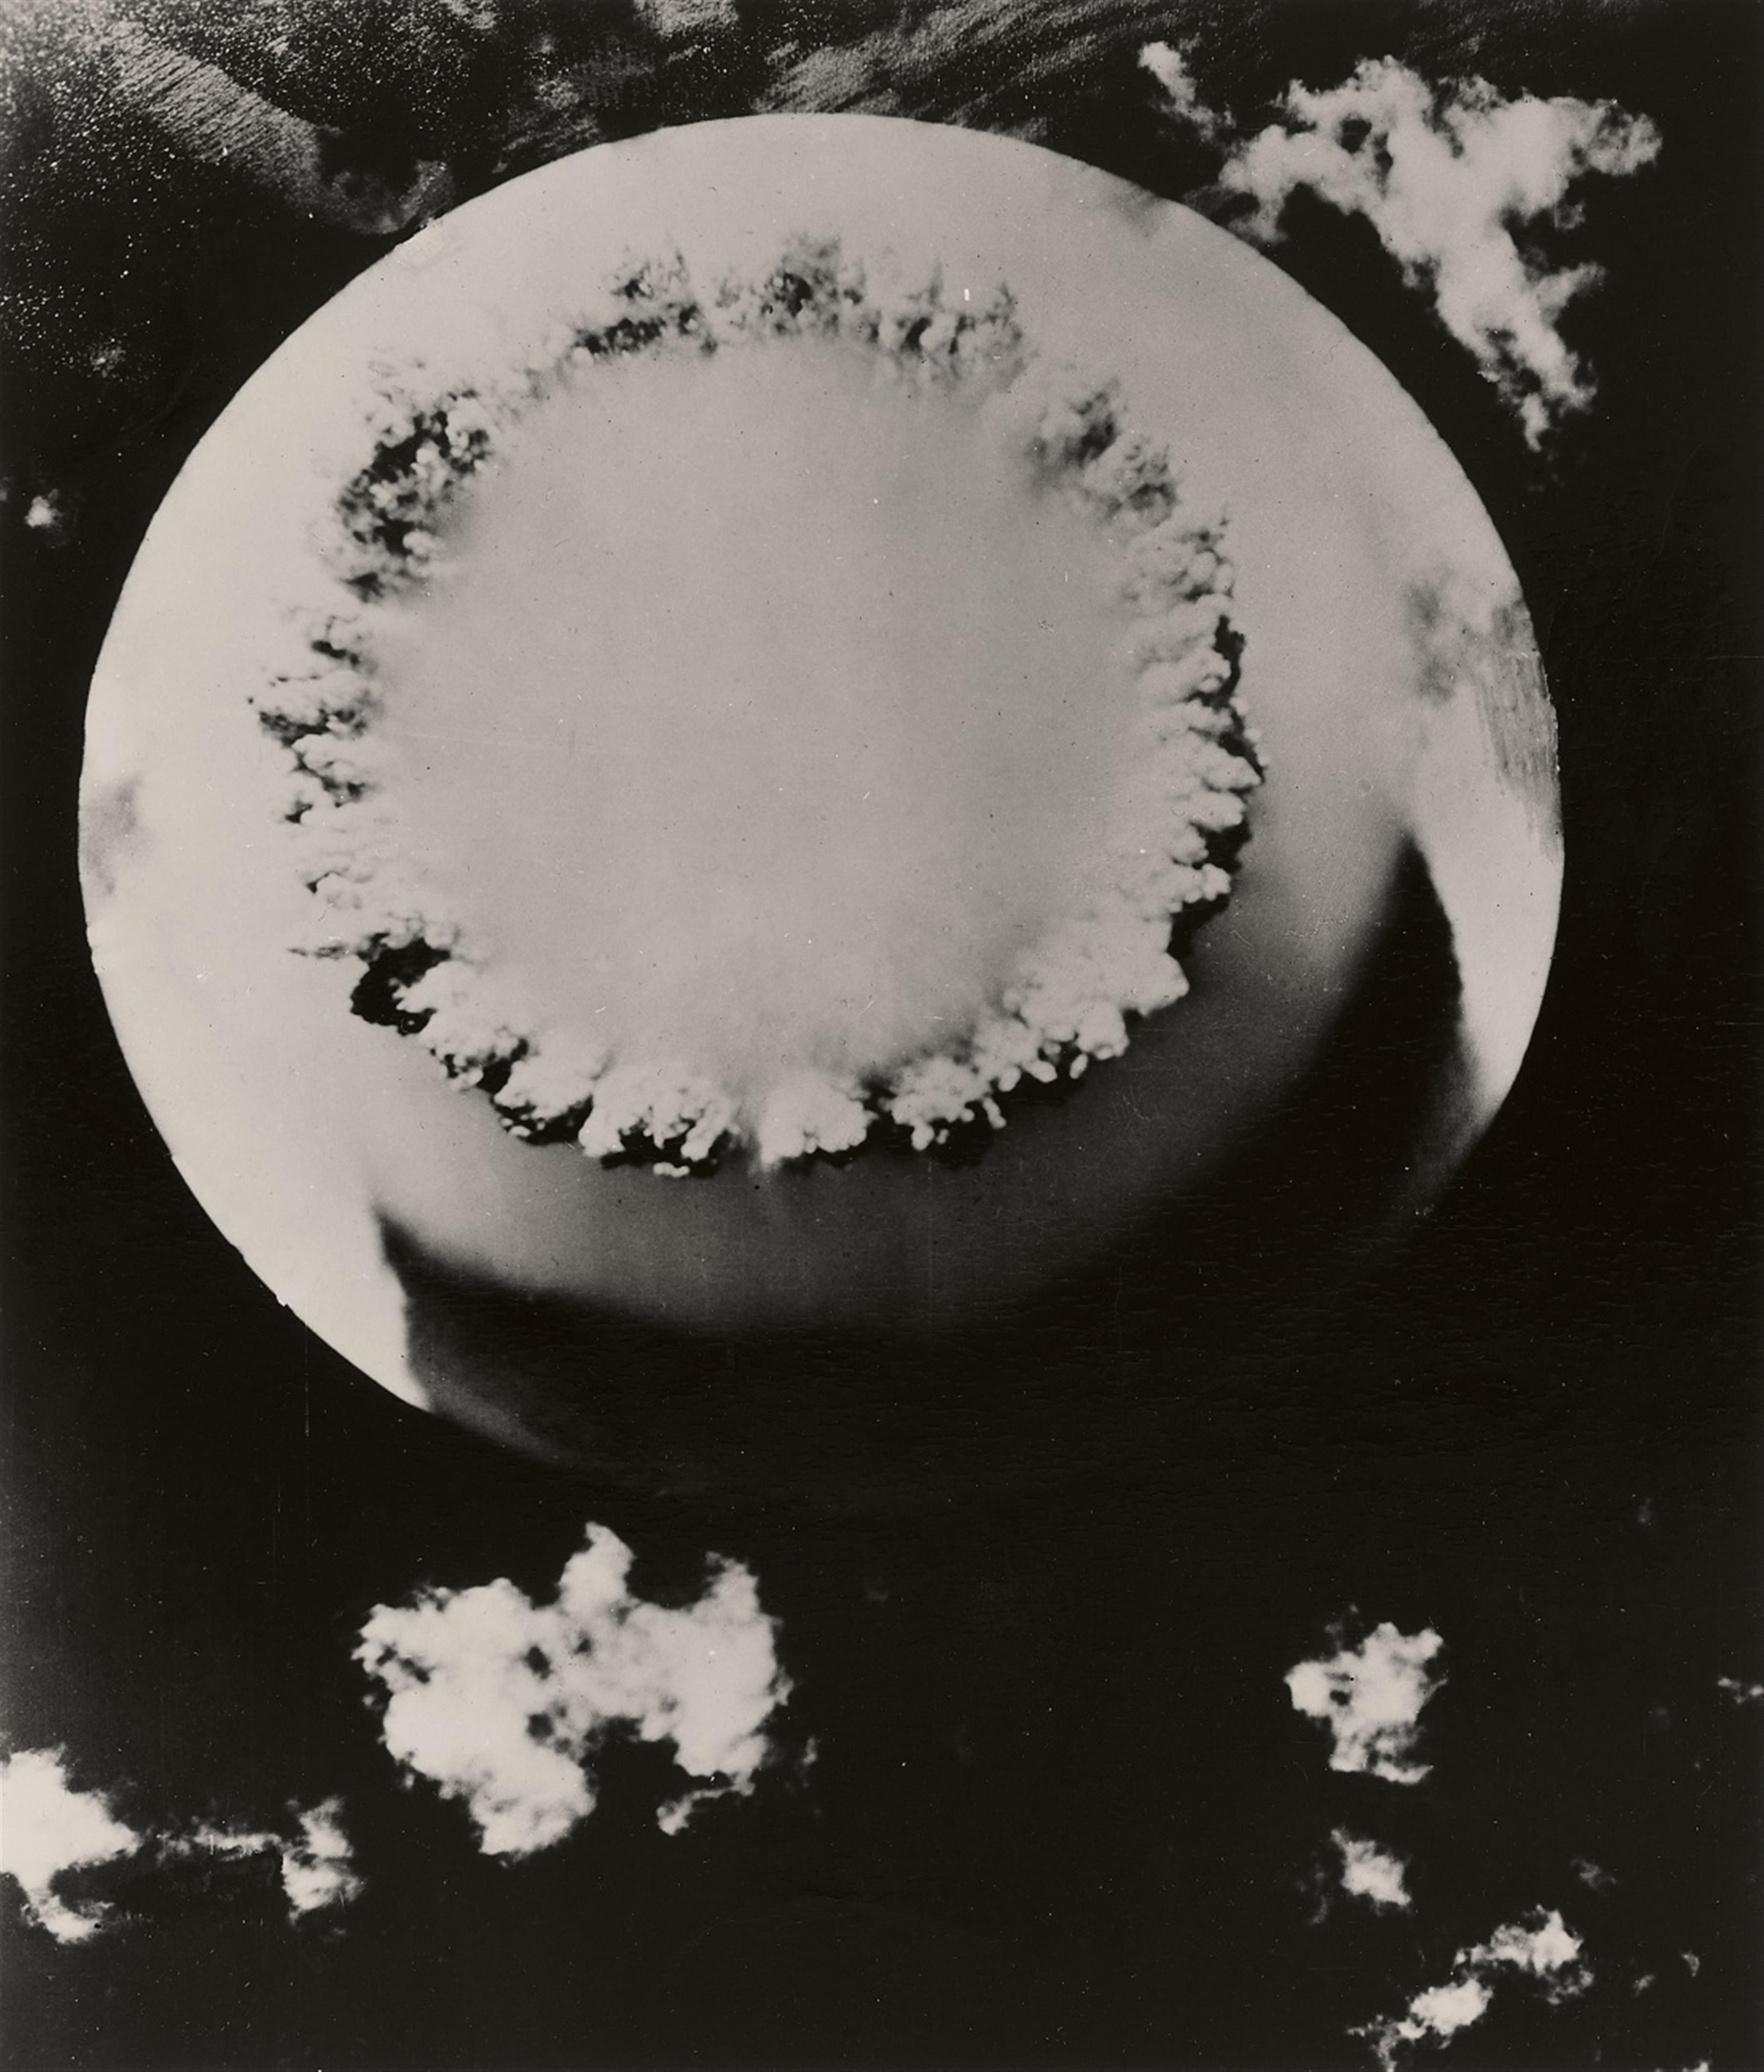 Joint Army Task Force One Photo - "Operation Crossroads" - Aufnahmen der Atombomben-Tests auf dem Bikini-Atoll - image-6